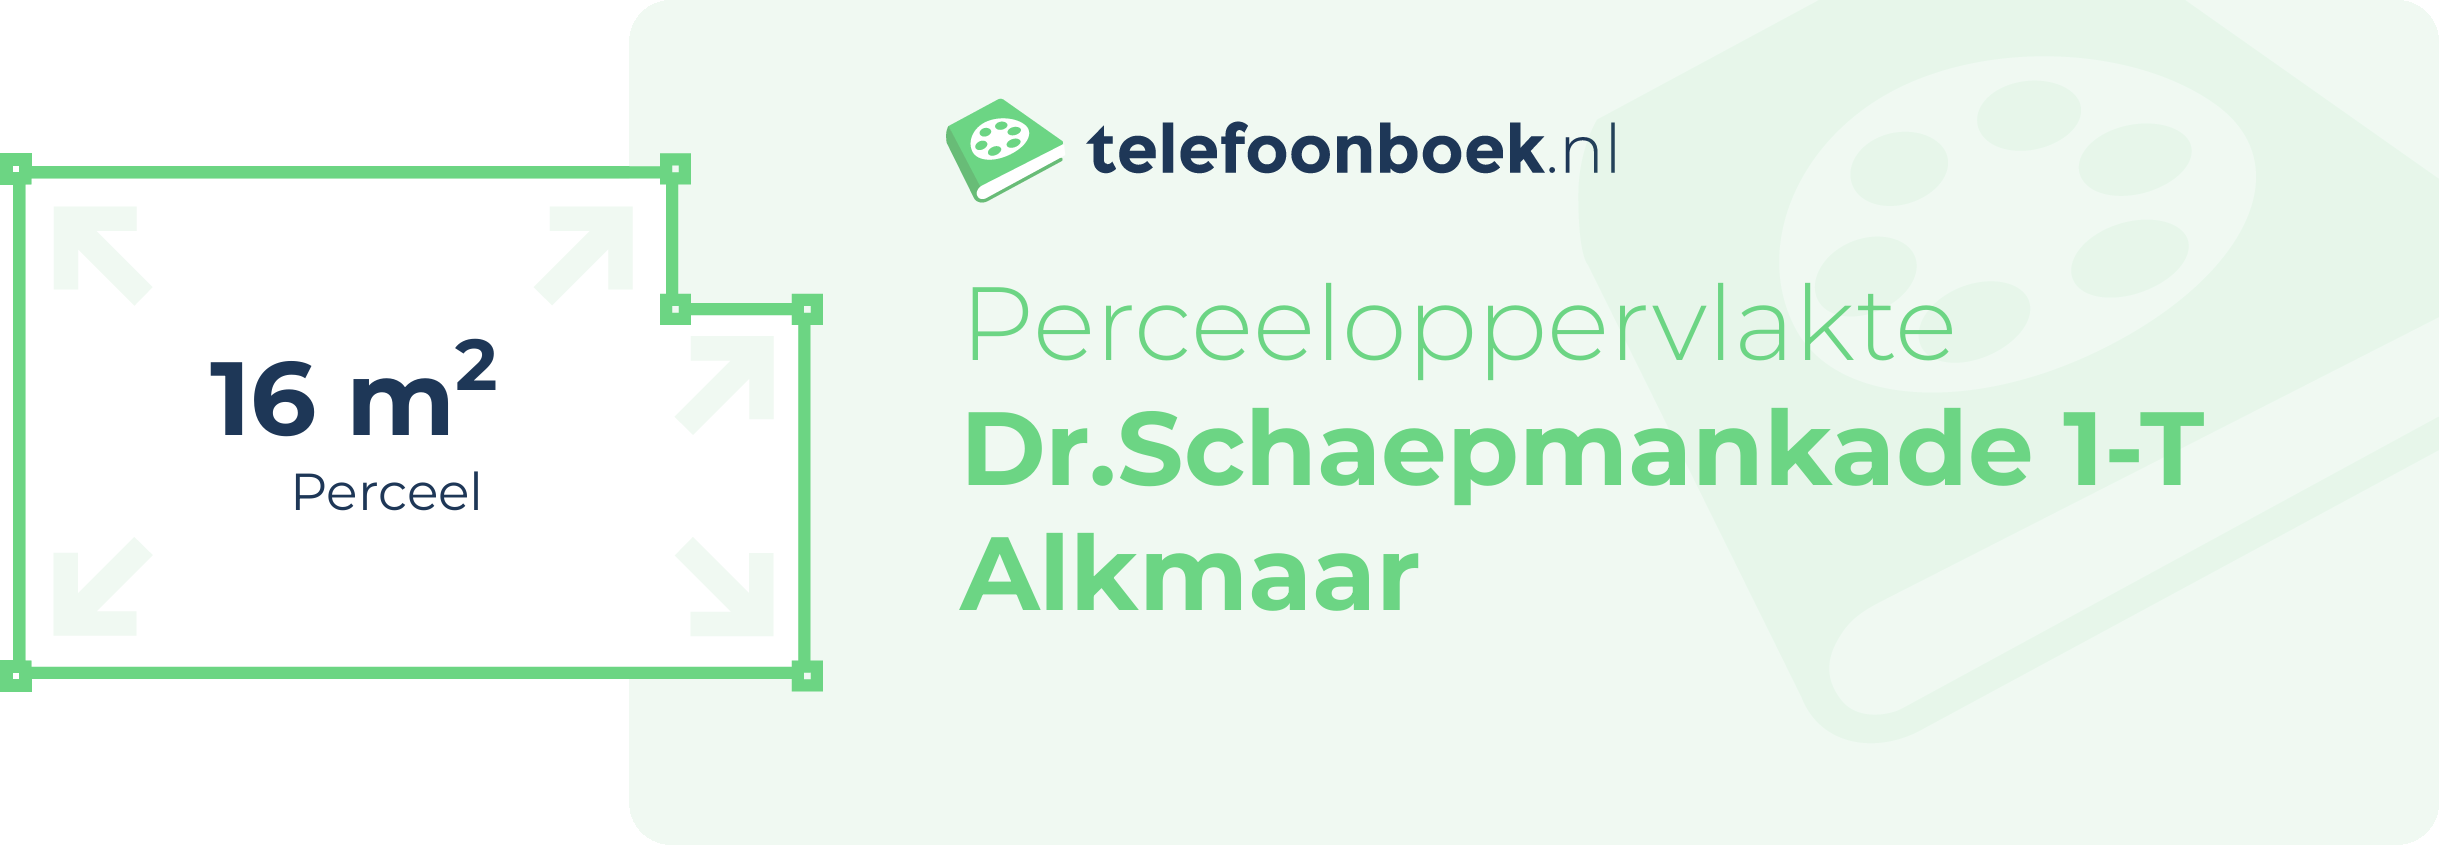 Perceeloppervlakte Dr.Schaepmankade 1-T Alkmaar